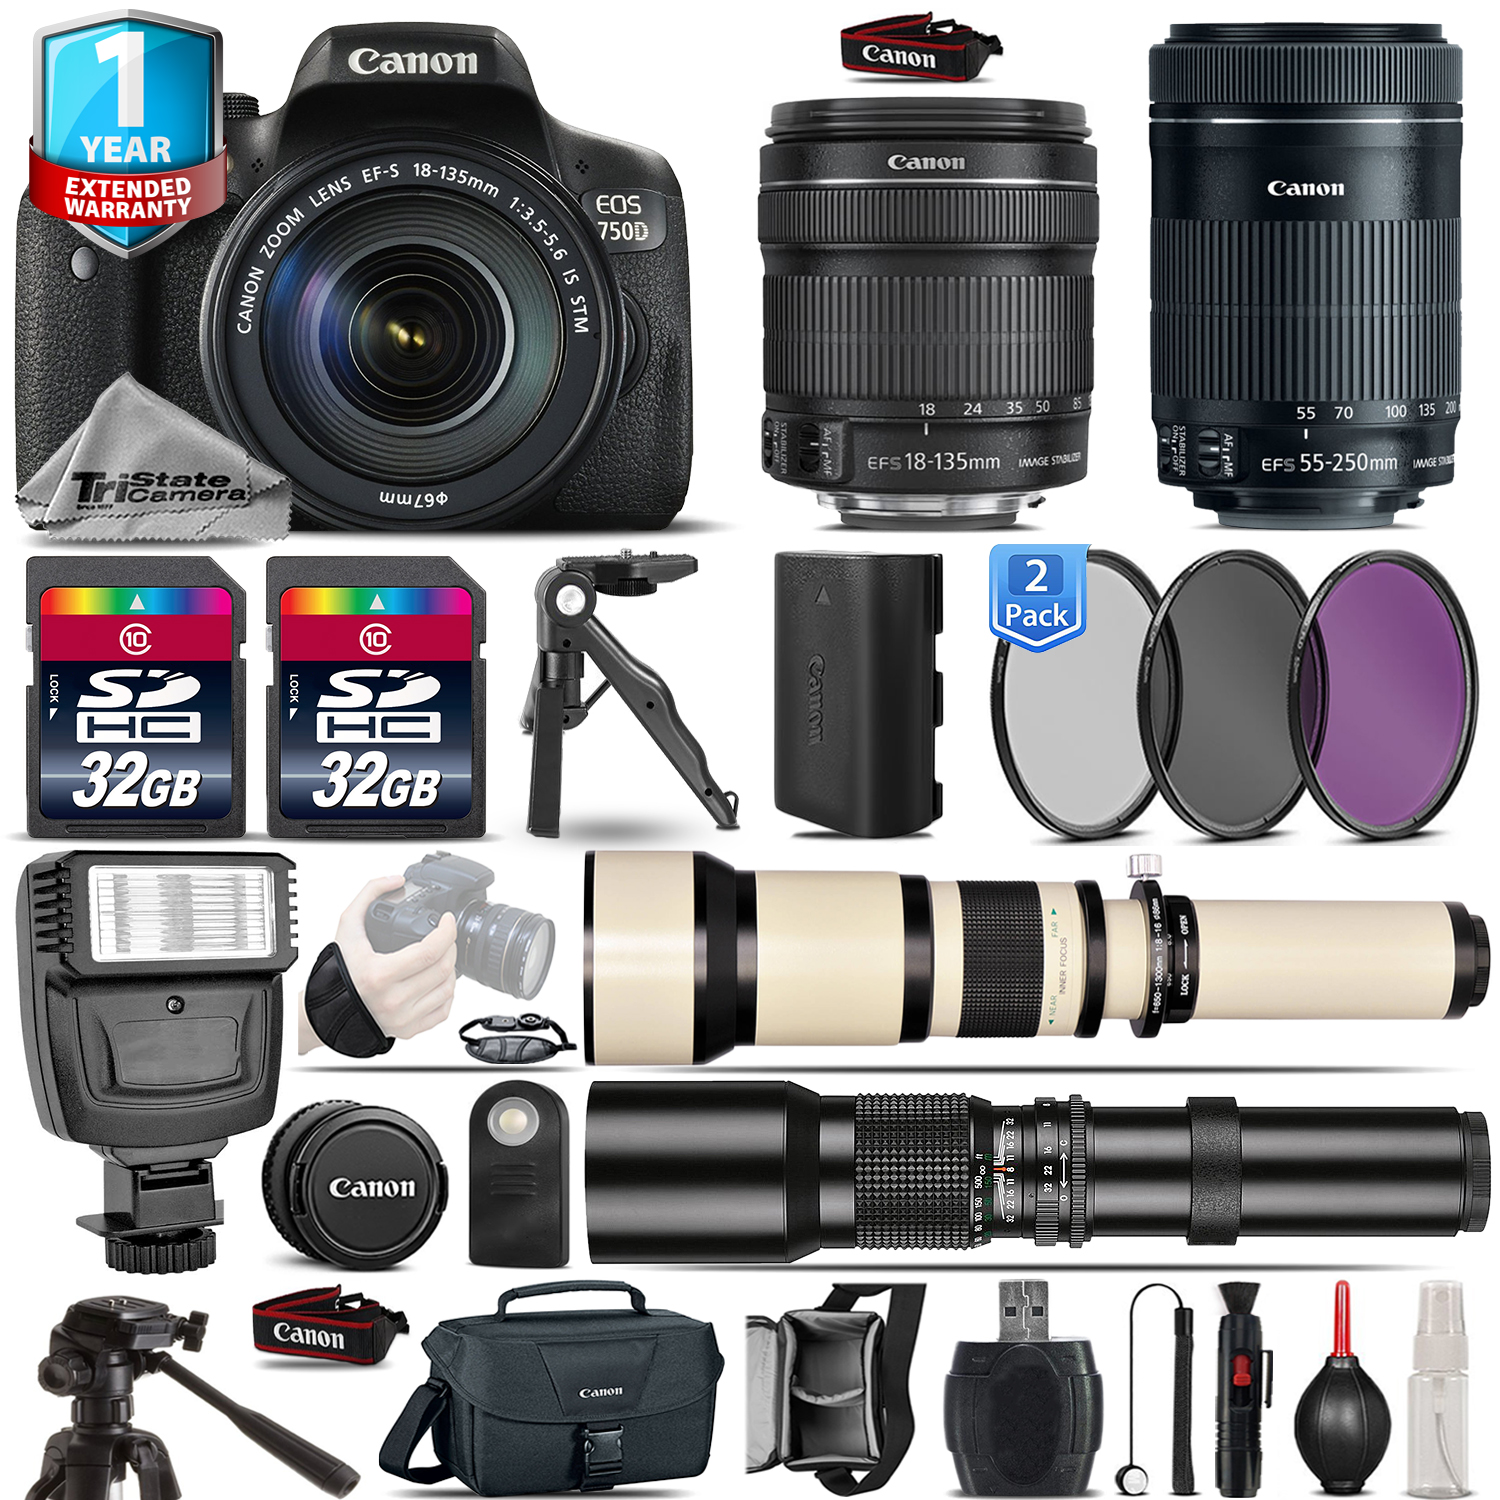 EOS Rebel 750D Camera + 18-135mm IS + 55-200mm + 1yr Warranty - 64GB Kit *FREE SHIPPING*